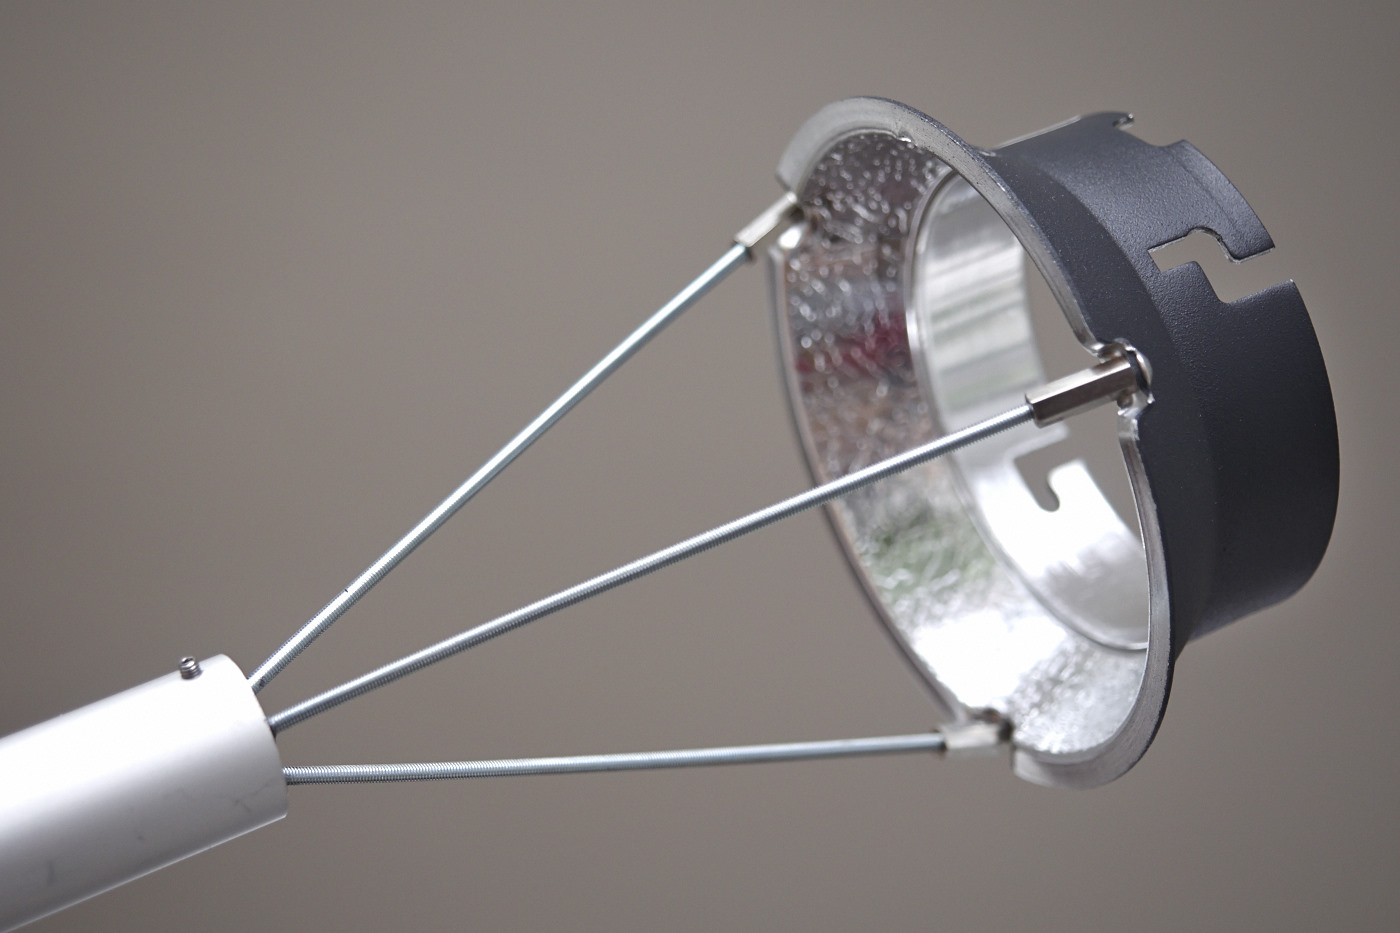 Elinchrom mount on focusable parabolic reflector